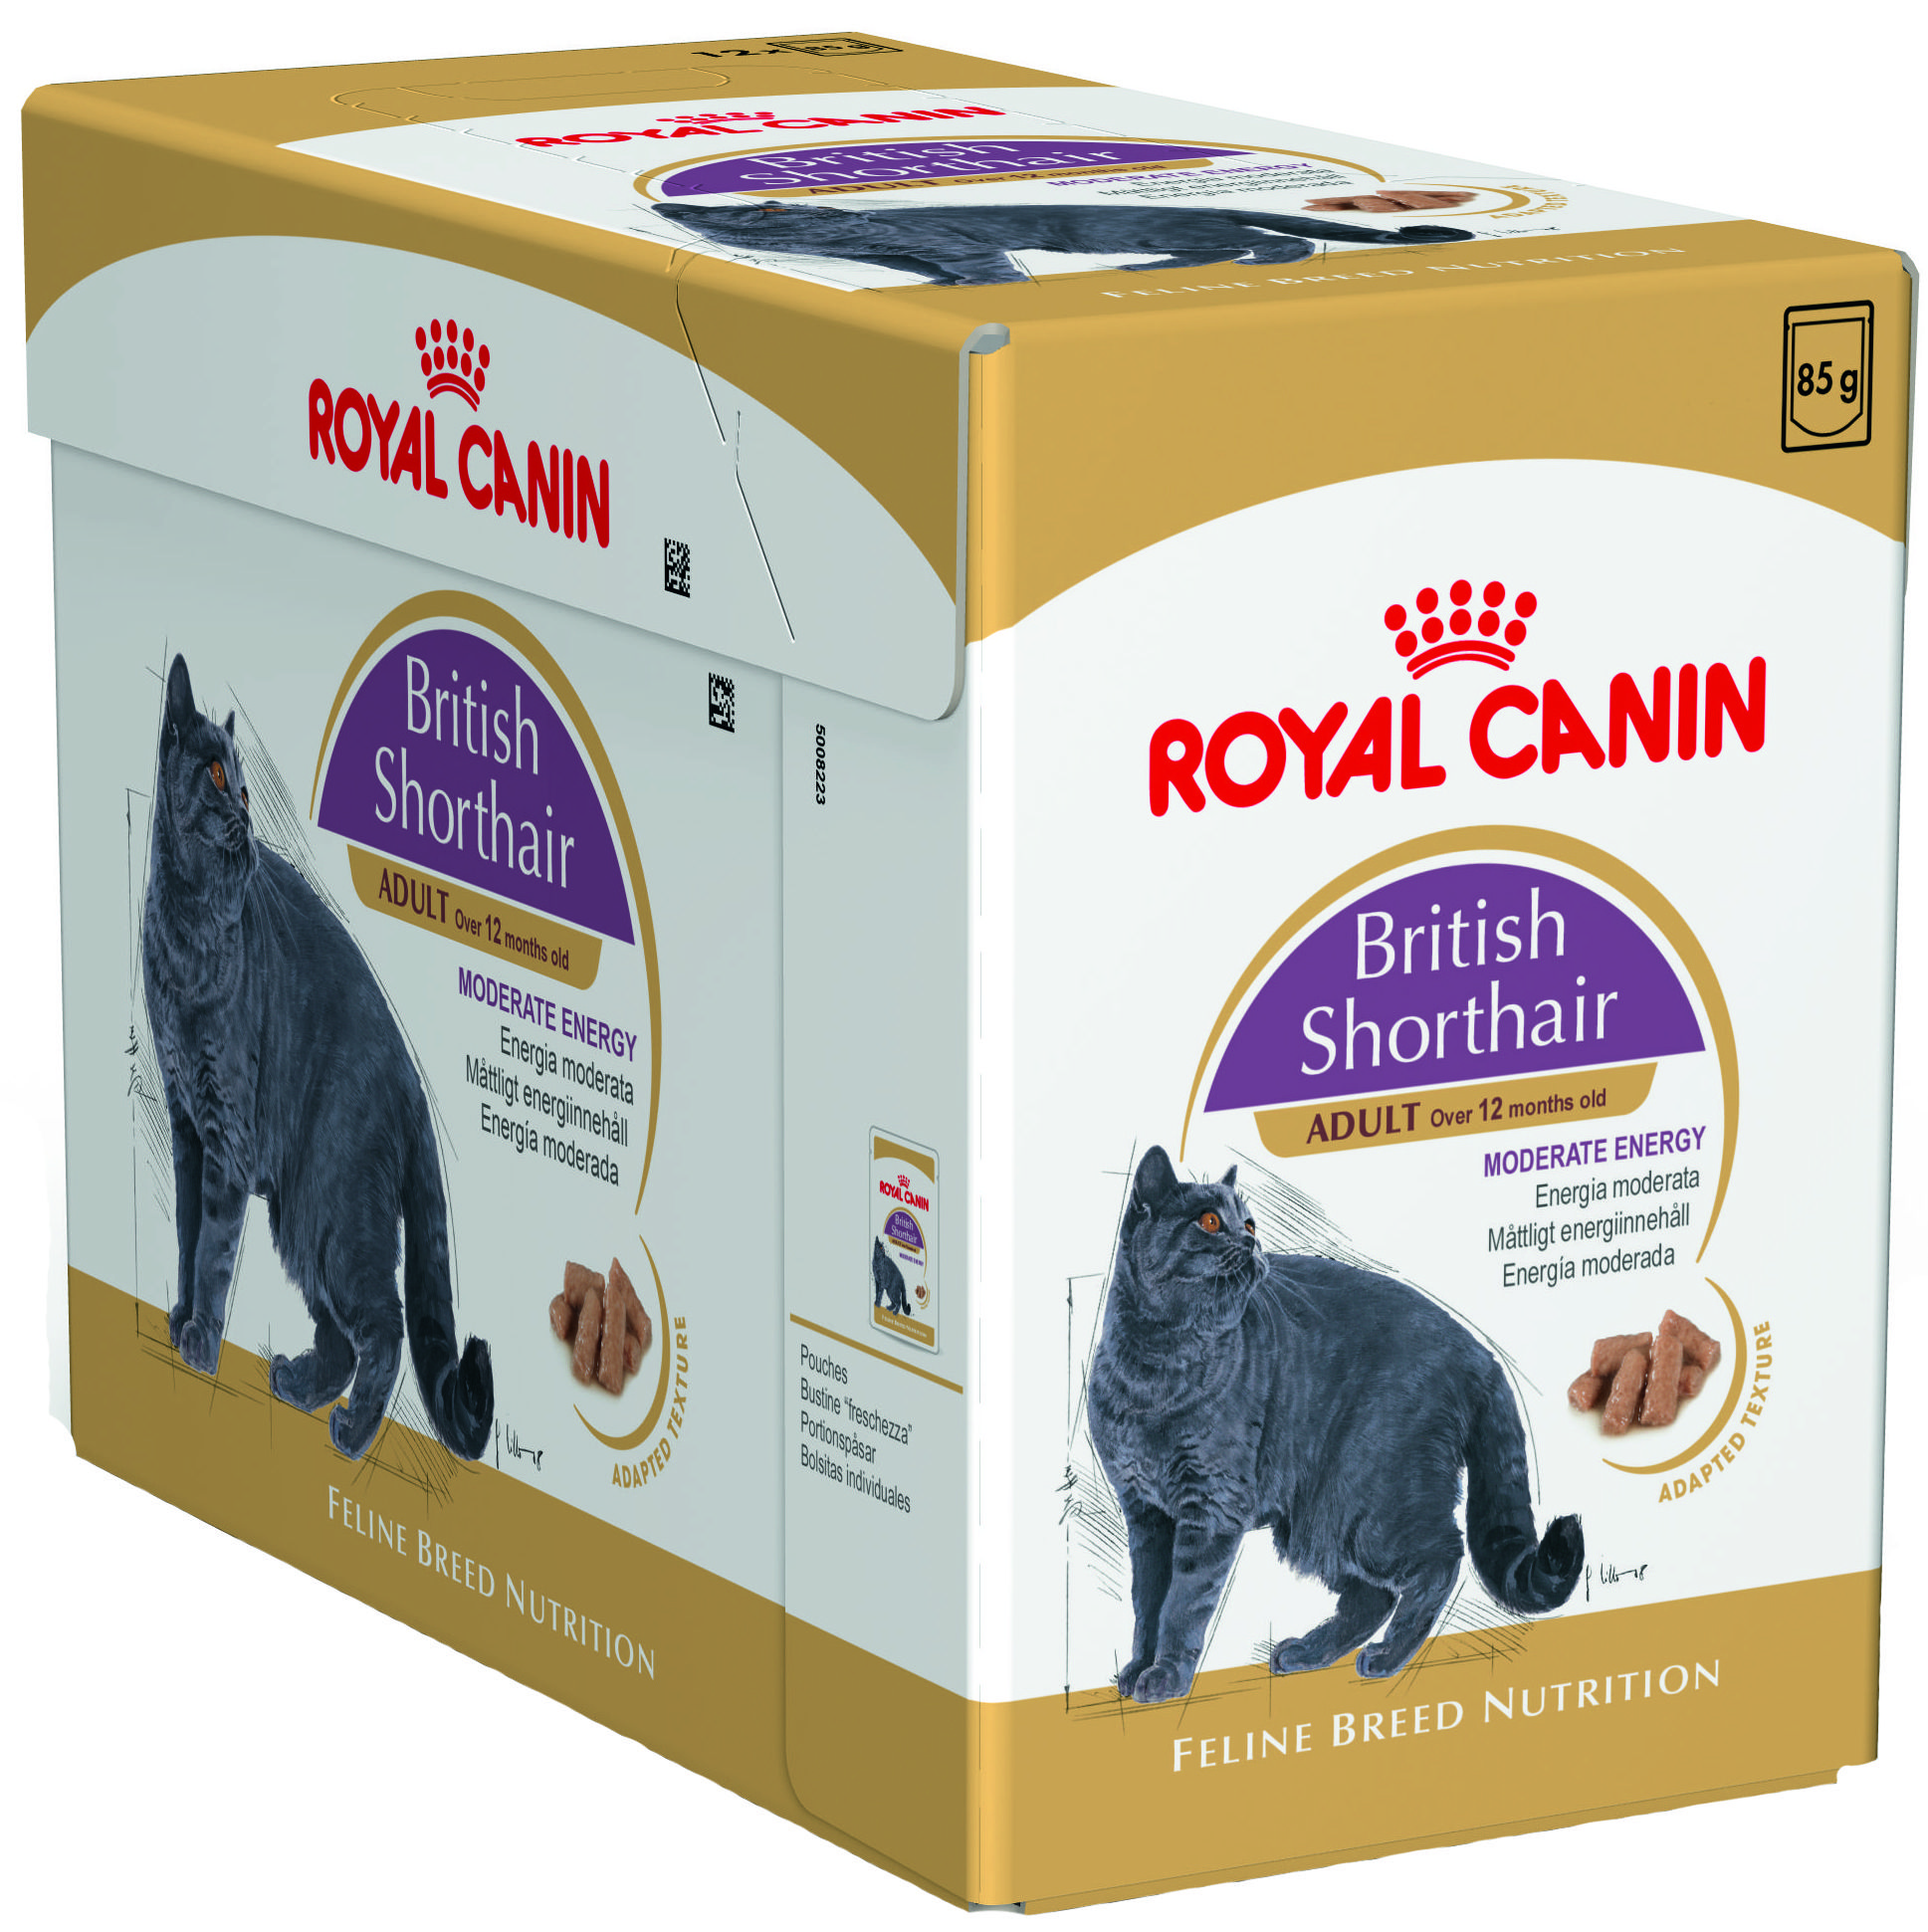 Royal Canin British Shorthair Adult пауч для кошек 85 г Комплект 5+1 1